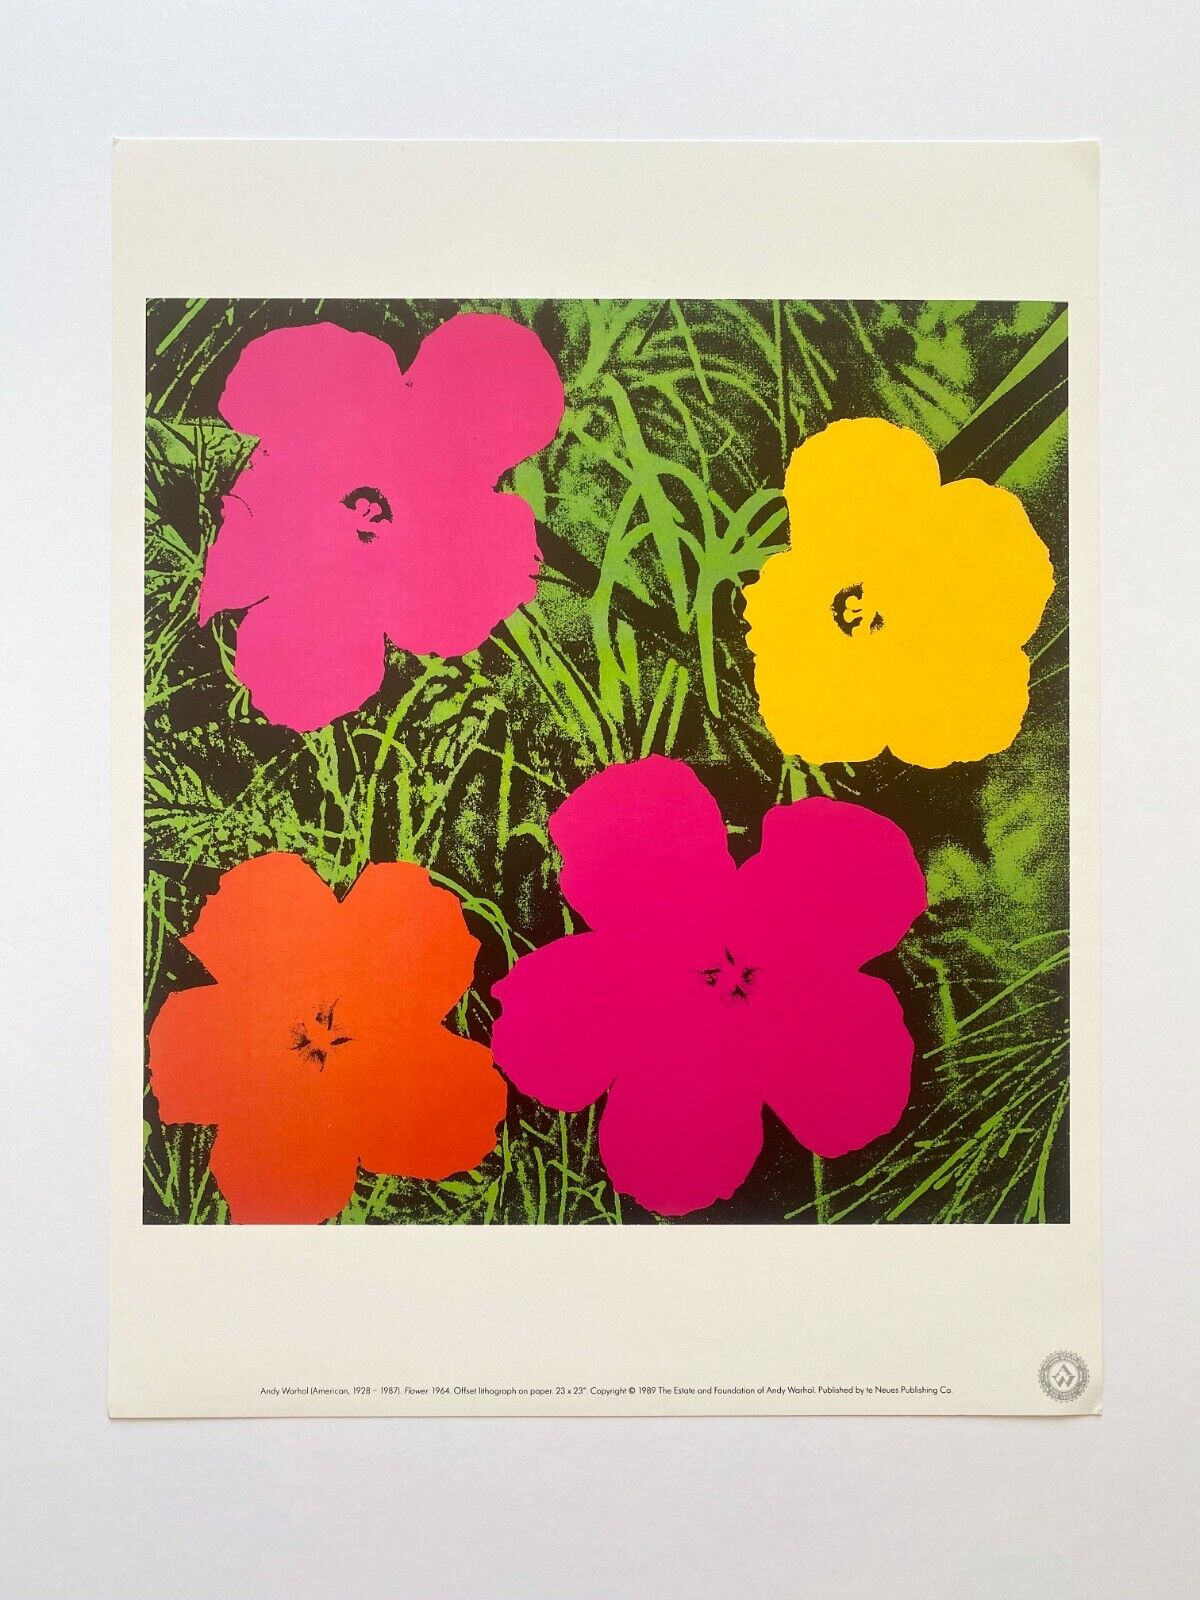 1989 Andy Warhol Pop Art Flower (1964)